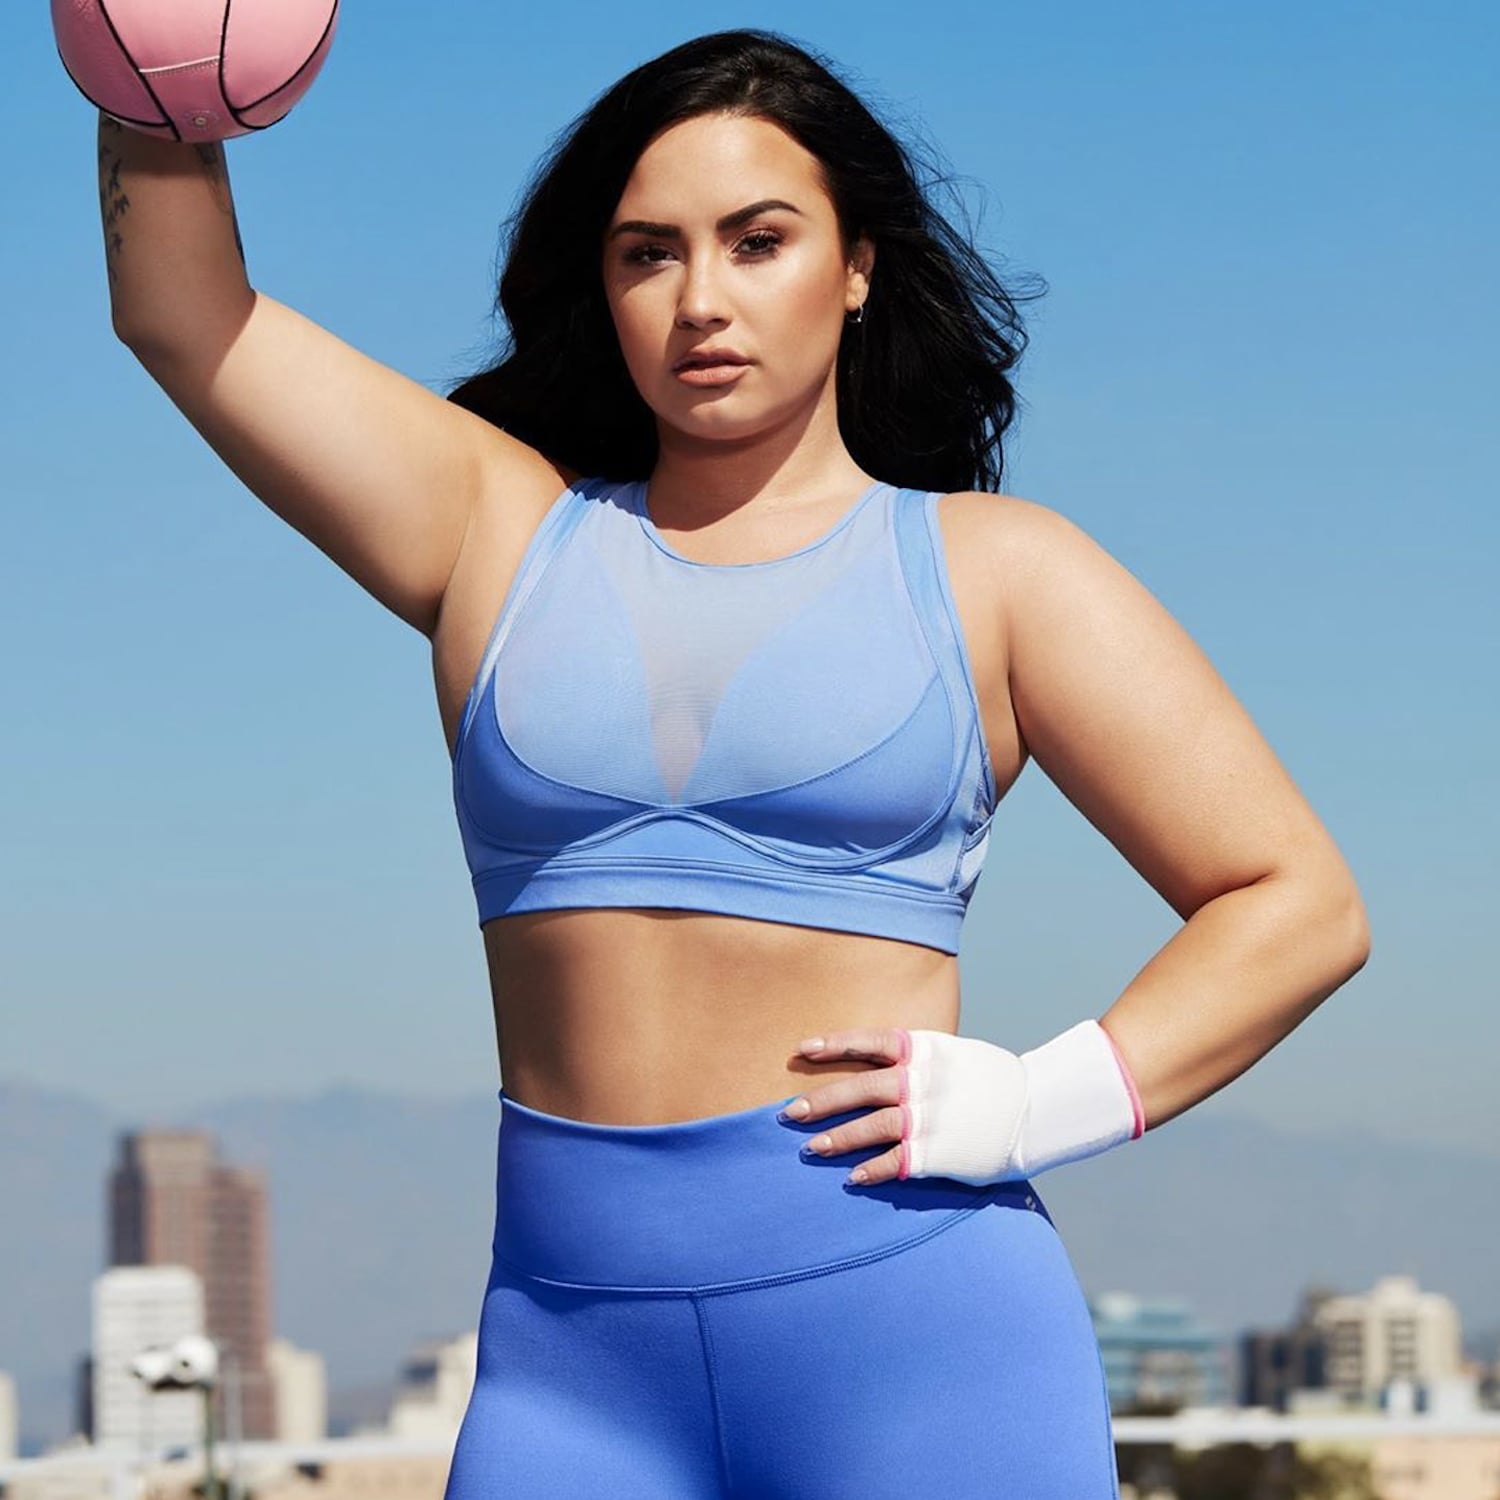 FABLETICS POWERHOLD ROSALIA demi Lovato gym fitness yoga leggings XXS uk  4/6 NEW £28.50 - PicClick UK